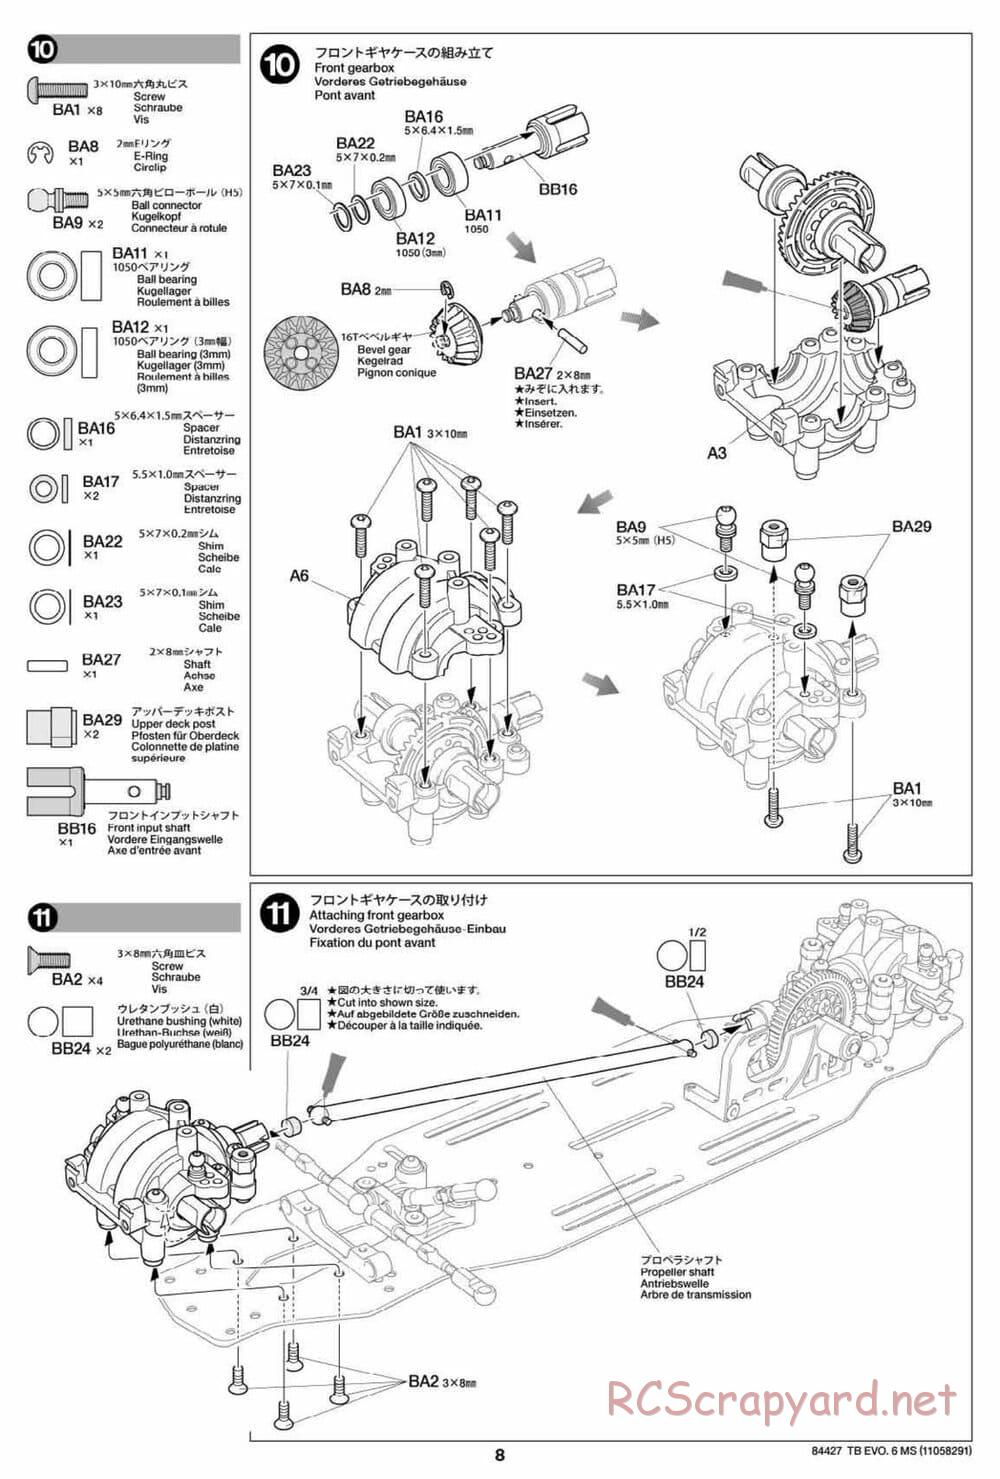 Tamiya - TB Evo.6 MS Chassis - Manual - Page 8